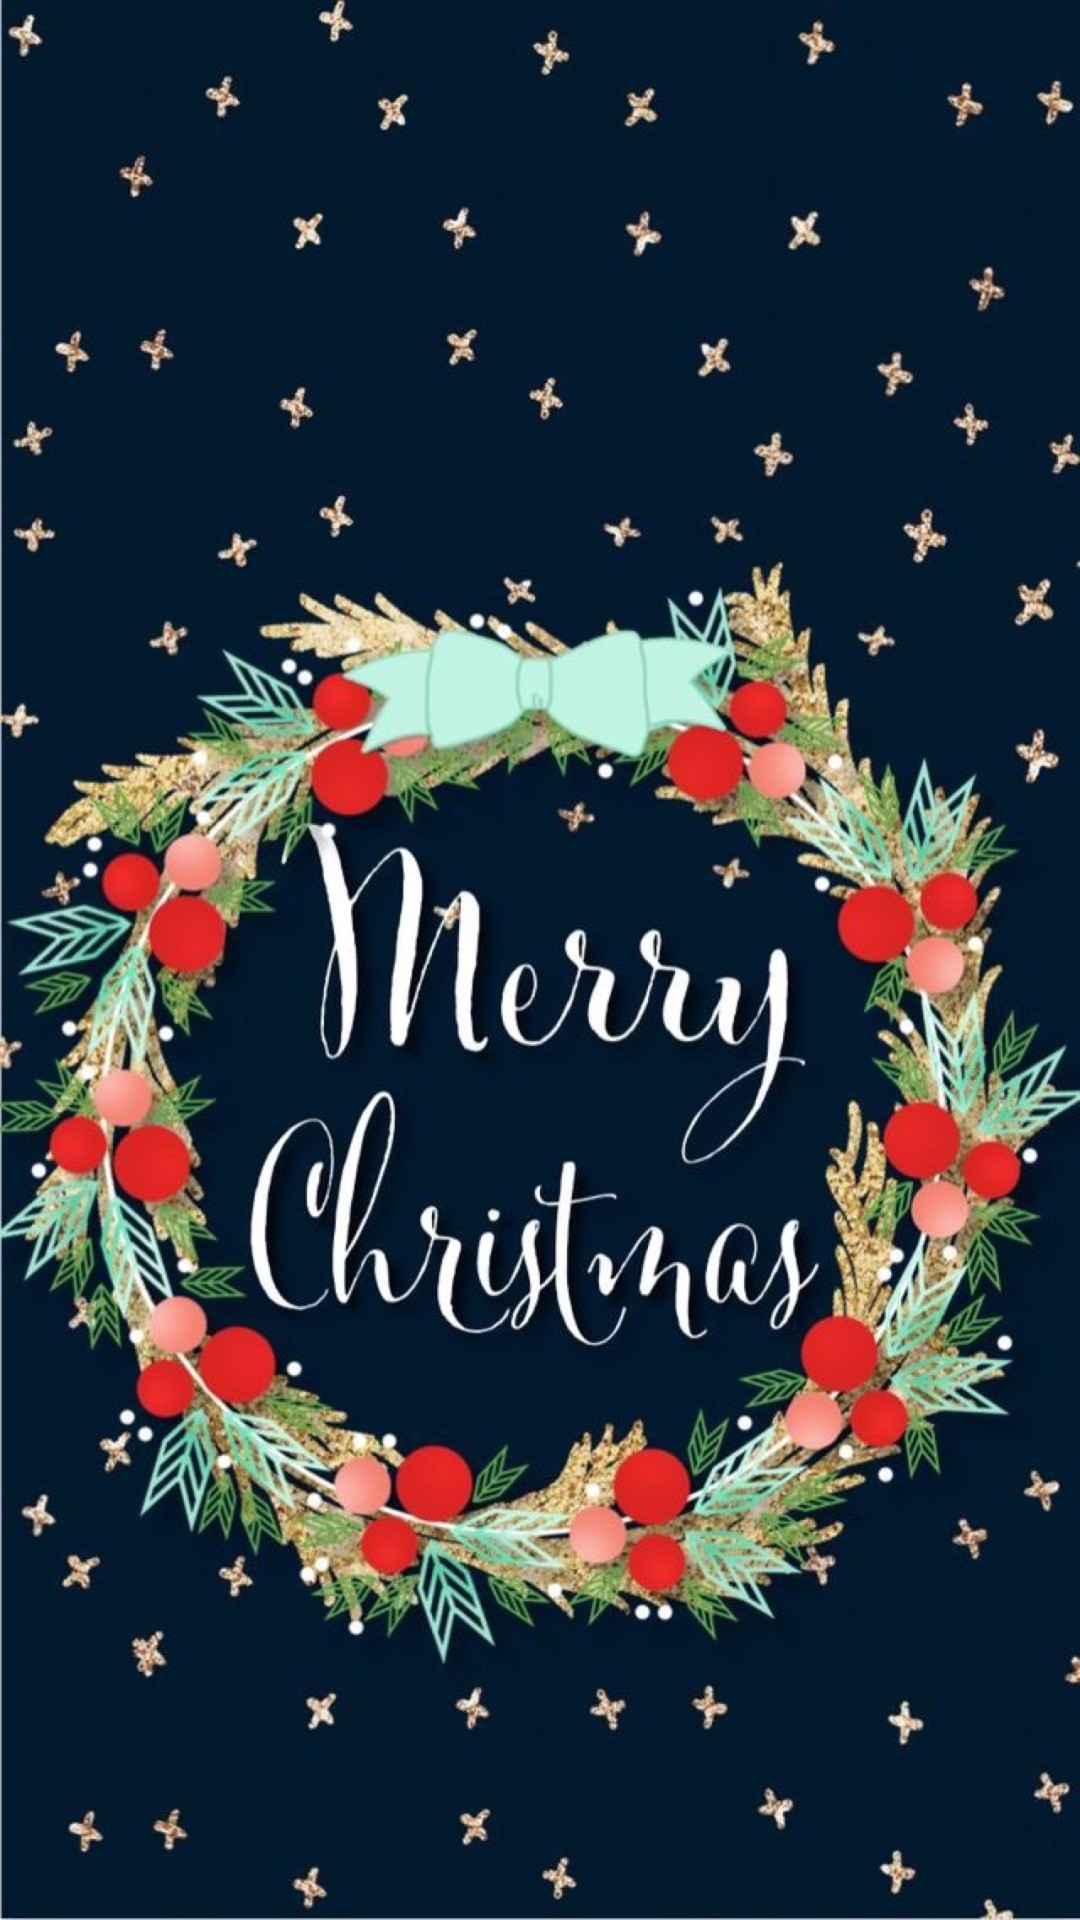 Christmas phone wallpaper ·① Download free beautiful ...